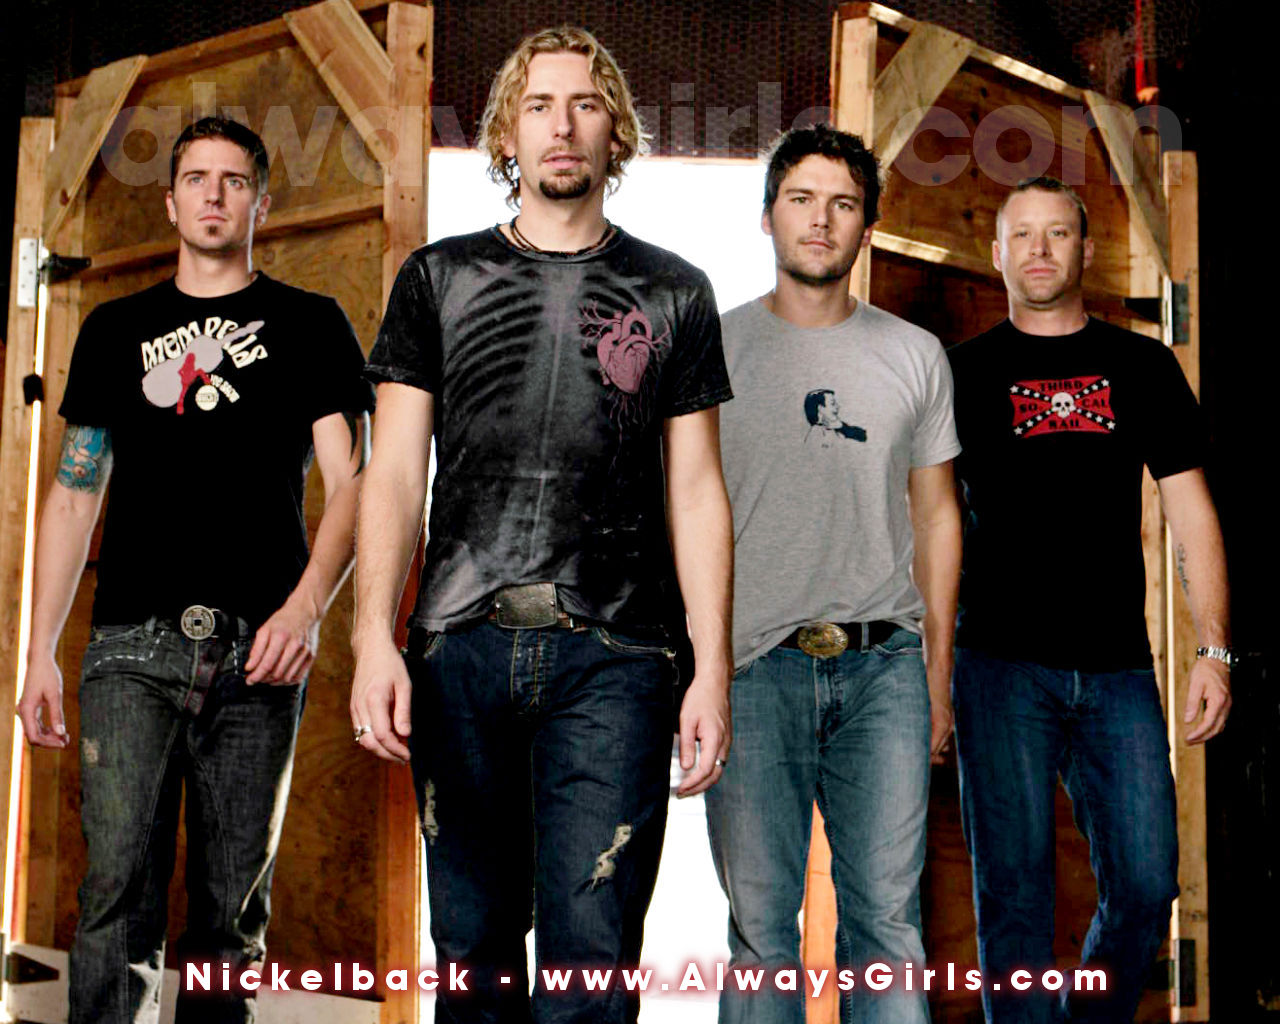 Nickelback - Nickelback Wallpaper (25843238) - Fanpop